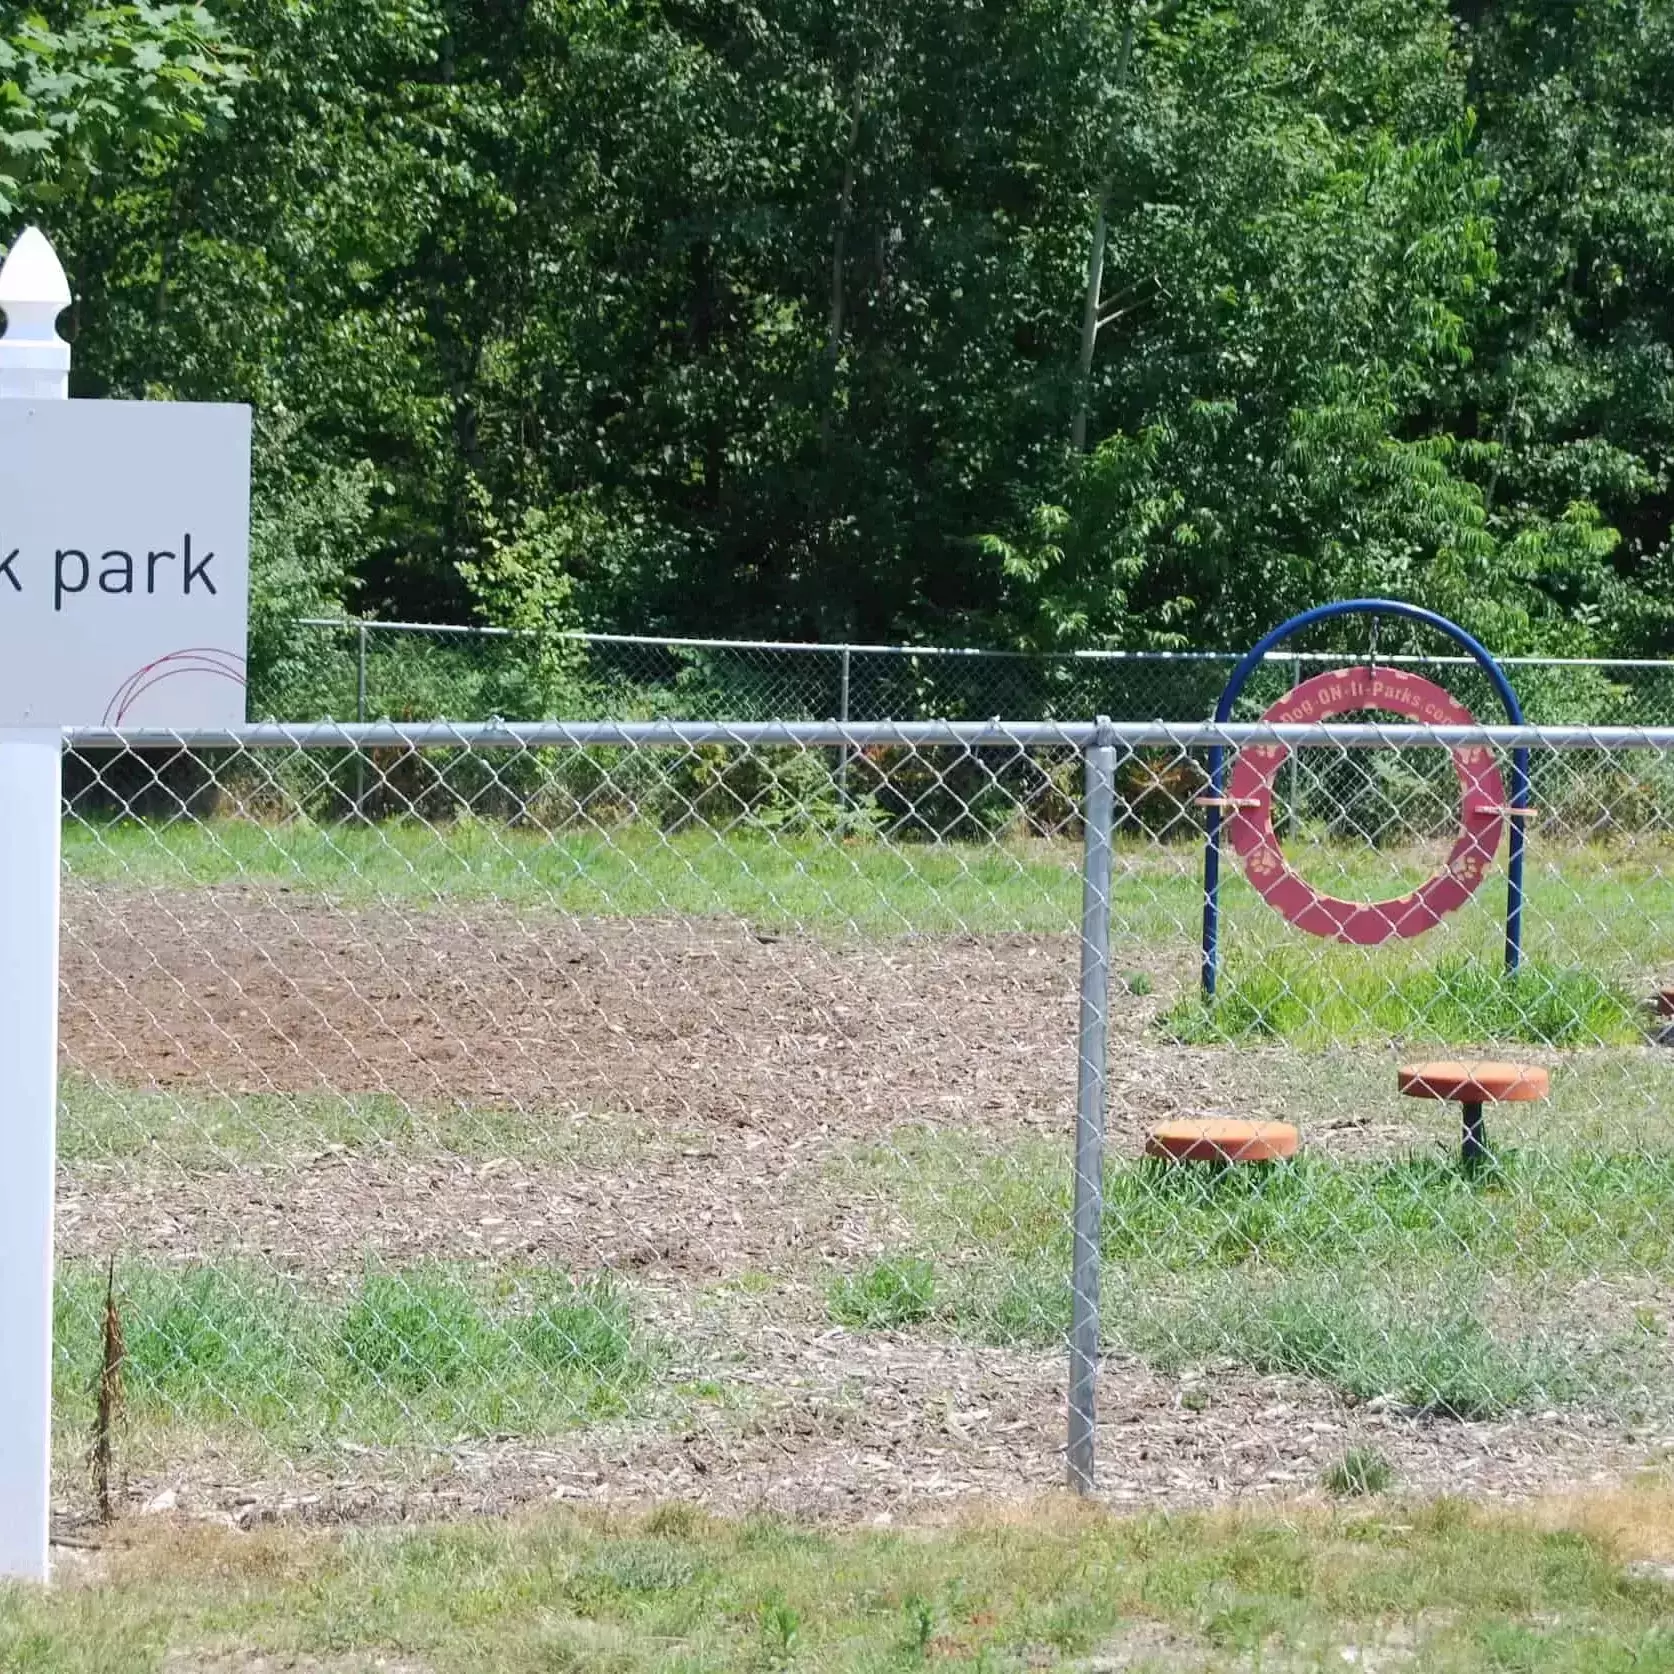 bark park